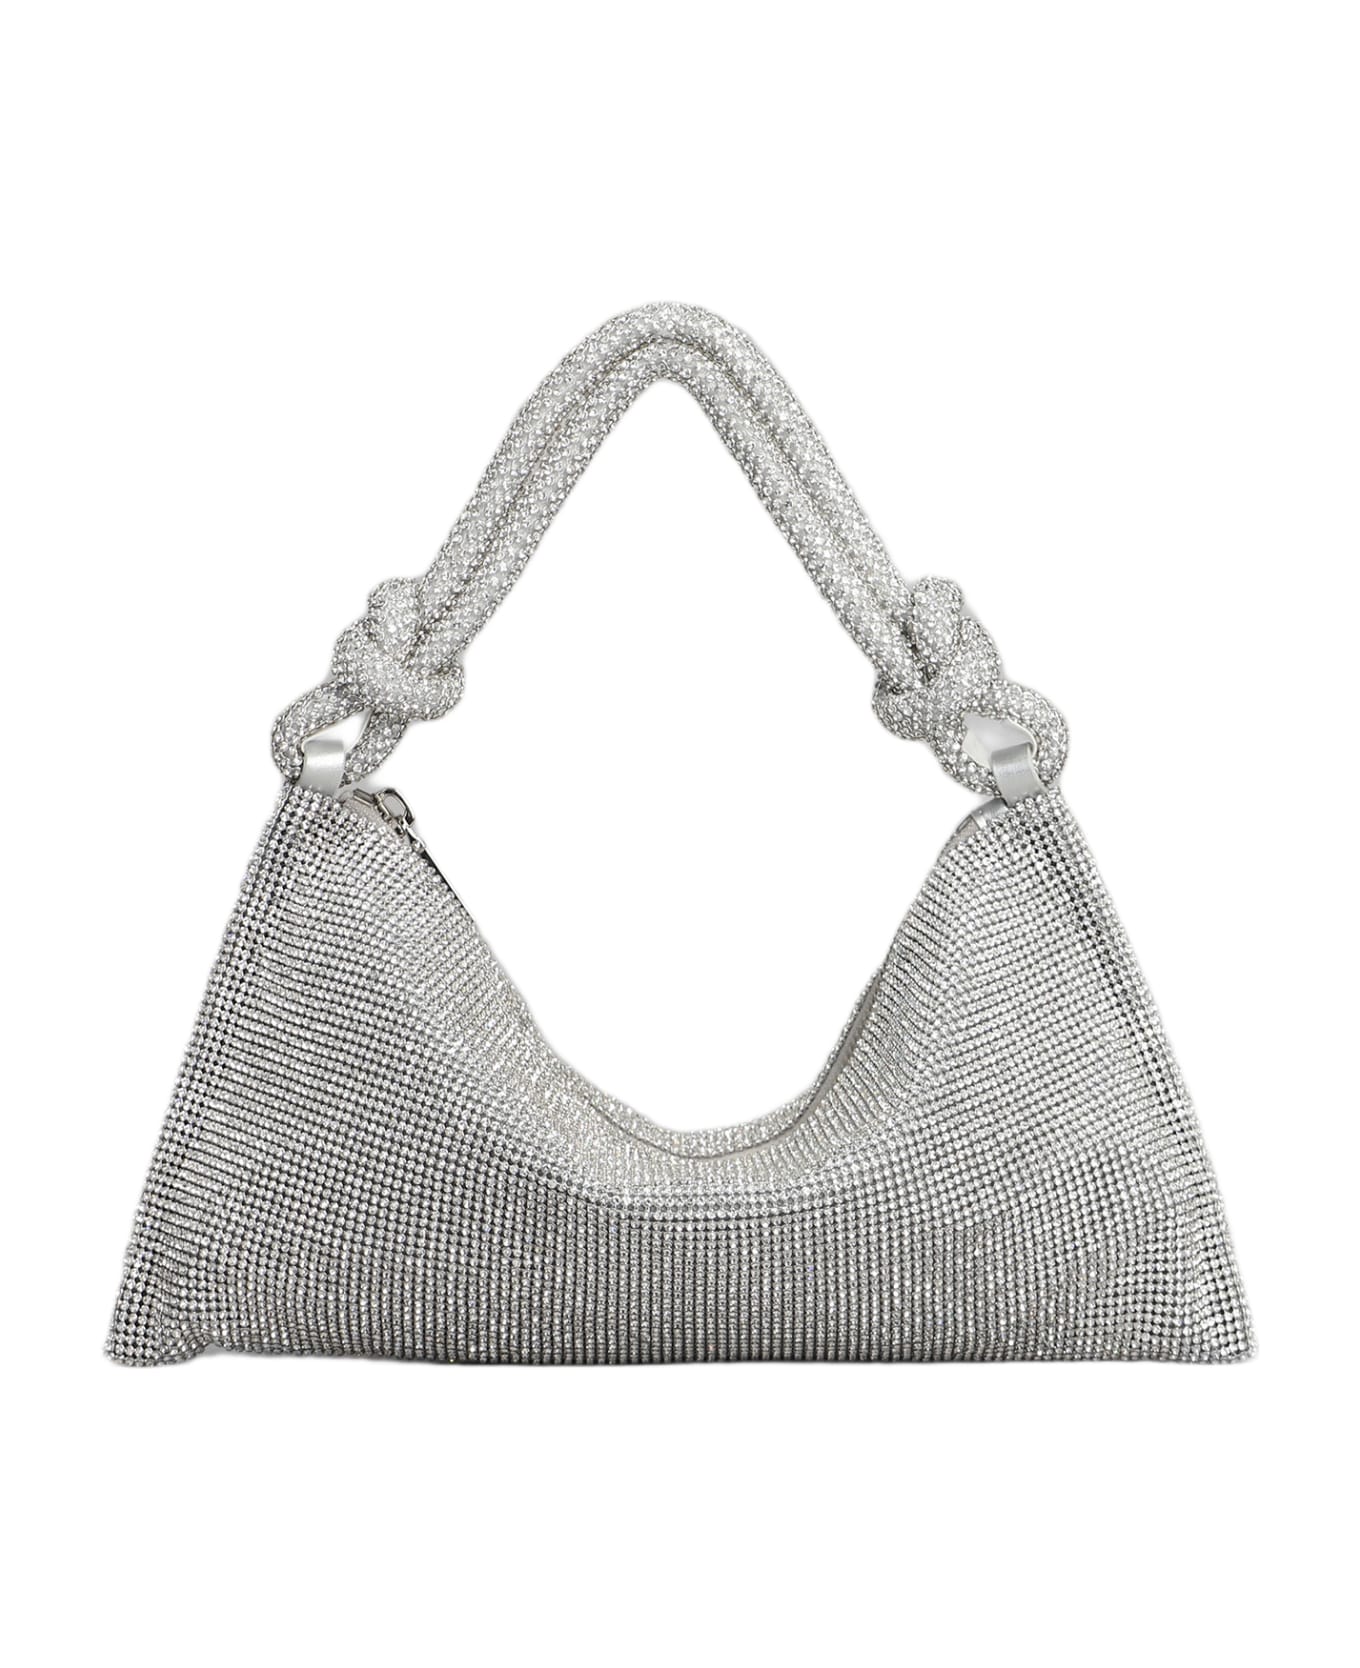 Cult Gaia Hera Nano Hand Bag In Silver Pvc - silver トートバッグ